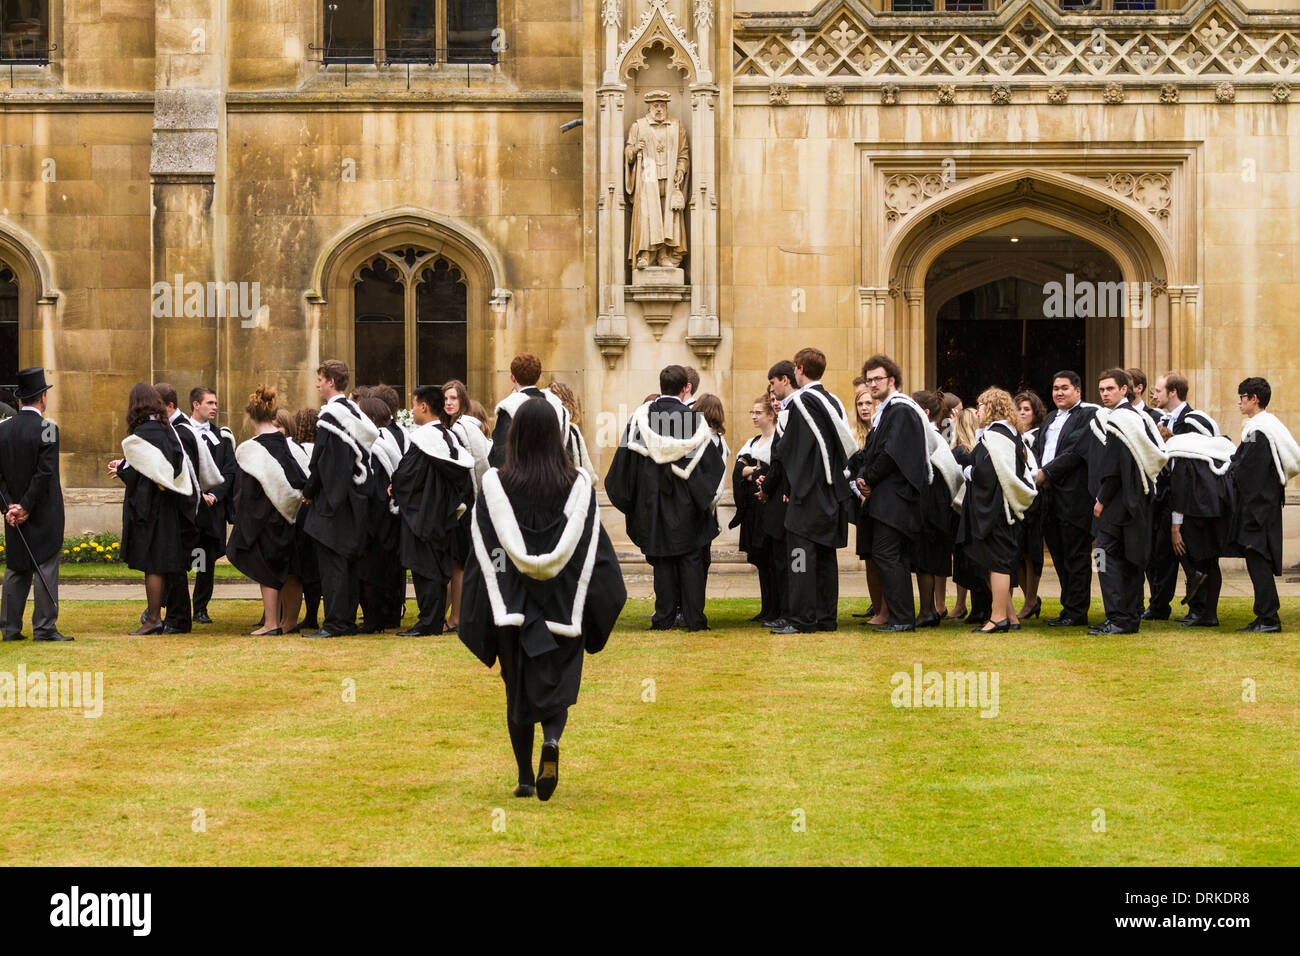 Cambridge University students gowns on Graduation day at Corpus Christi College, England Stock Photo